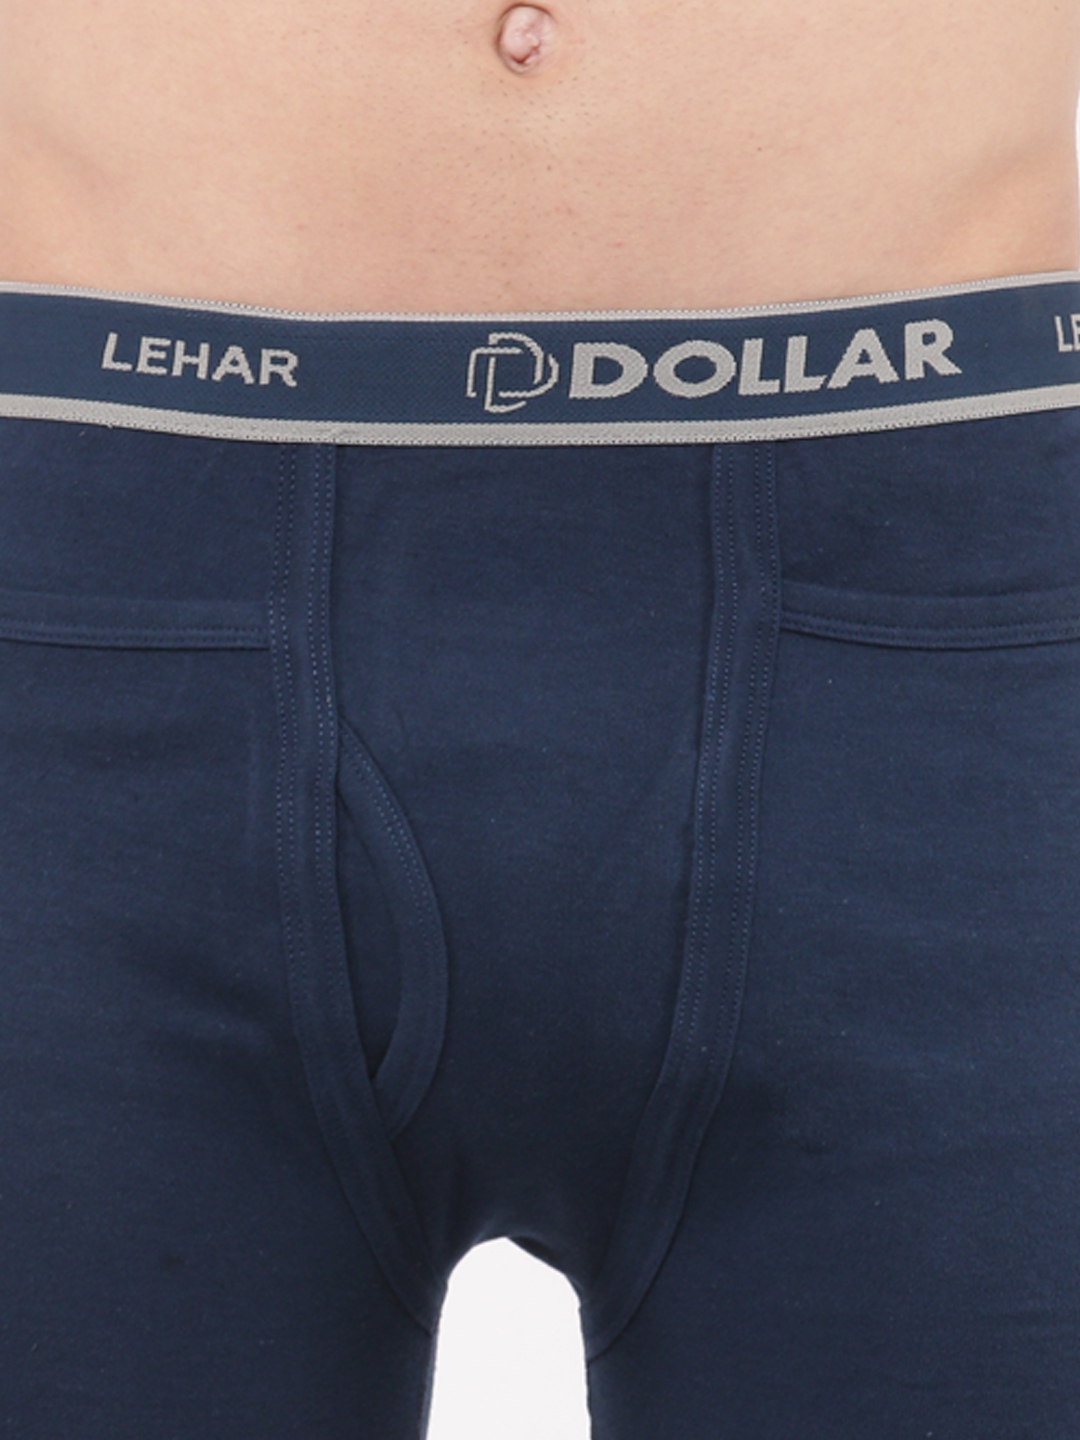 Buy DOLLAR Lehar Men's Assorted Solid 100% Cotton Pack of 3 Trunks